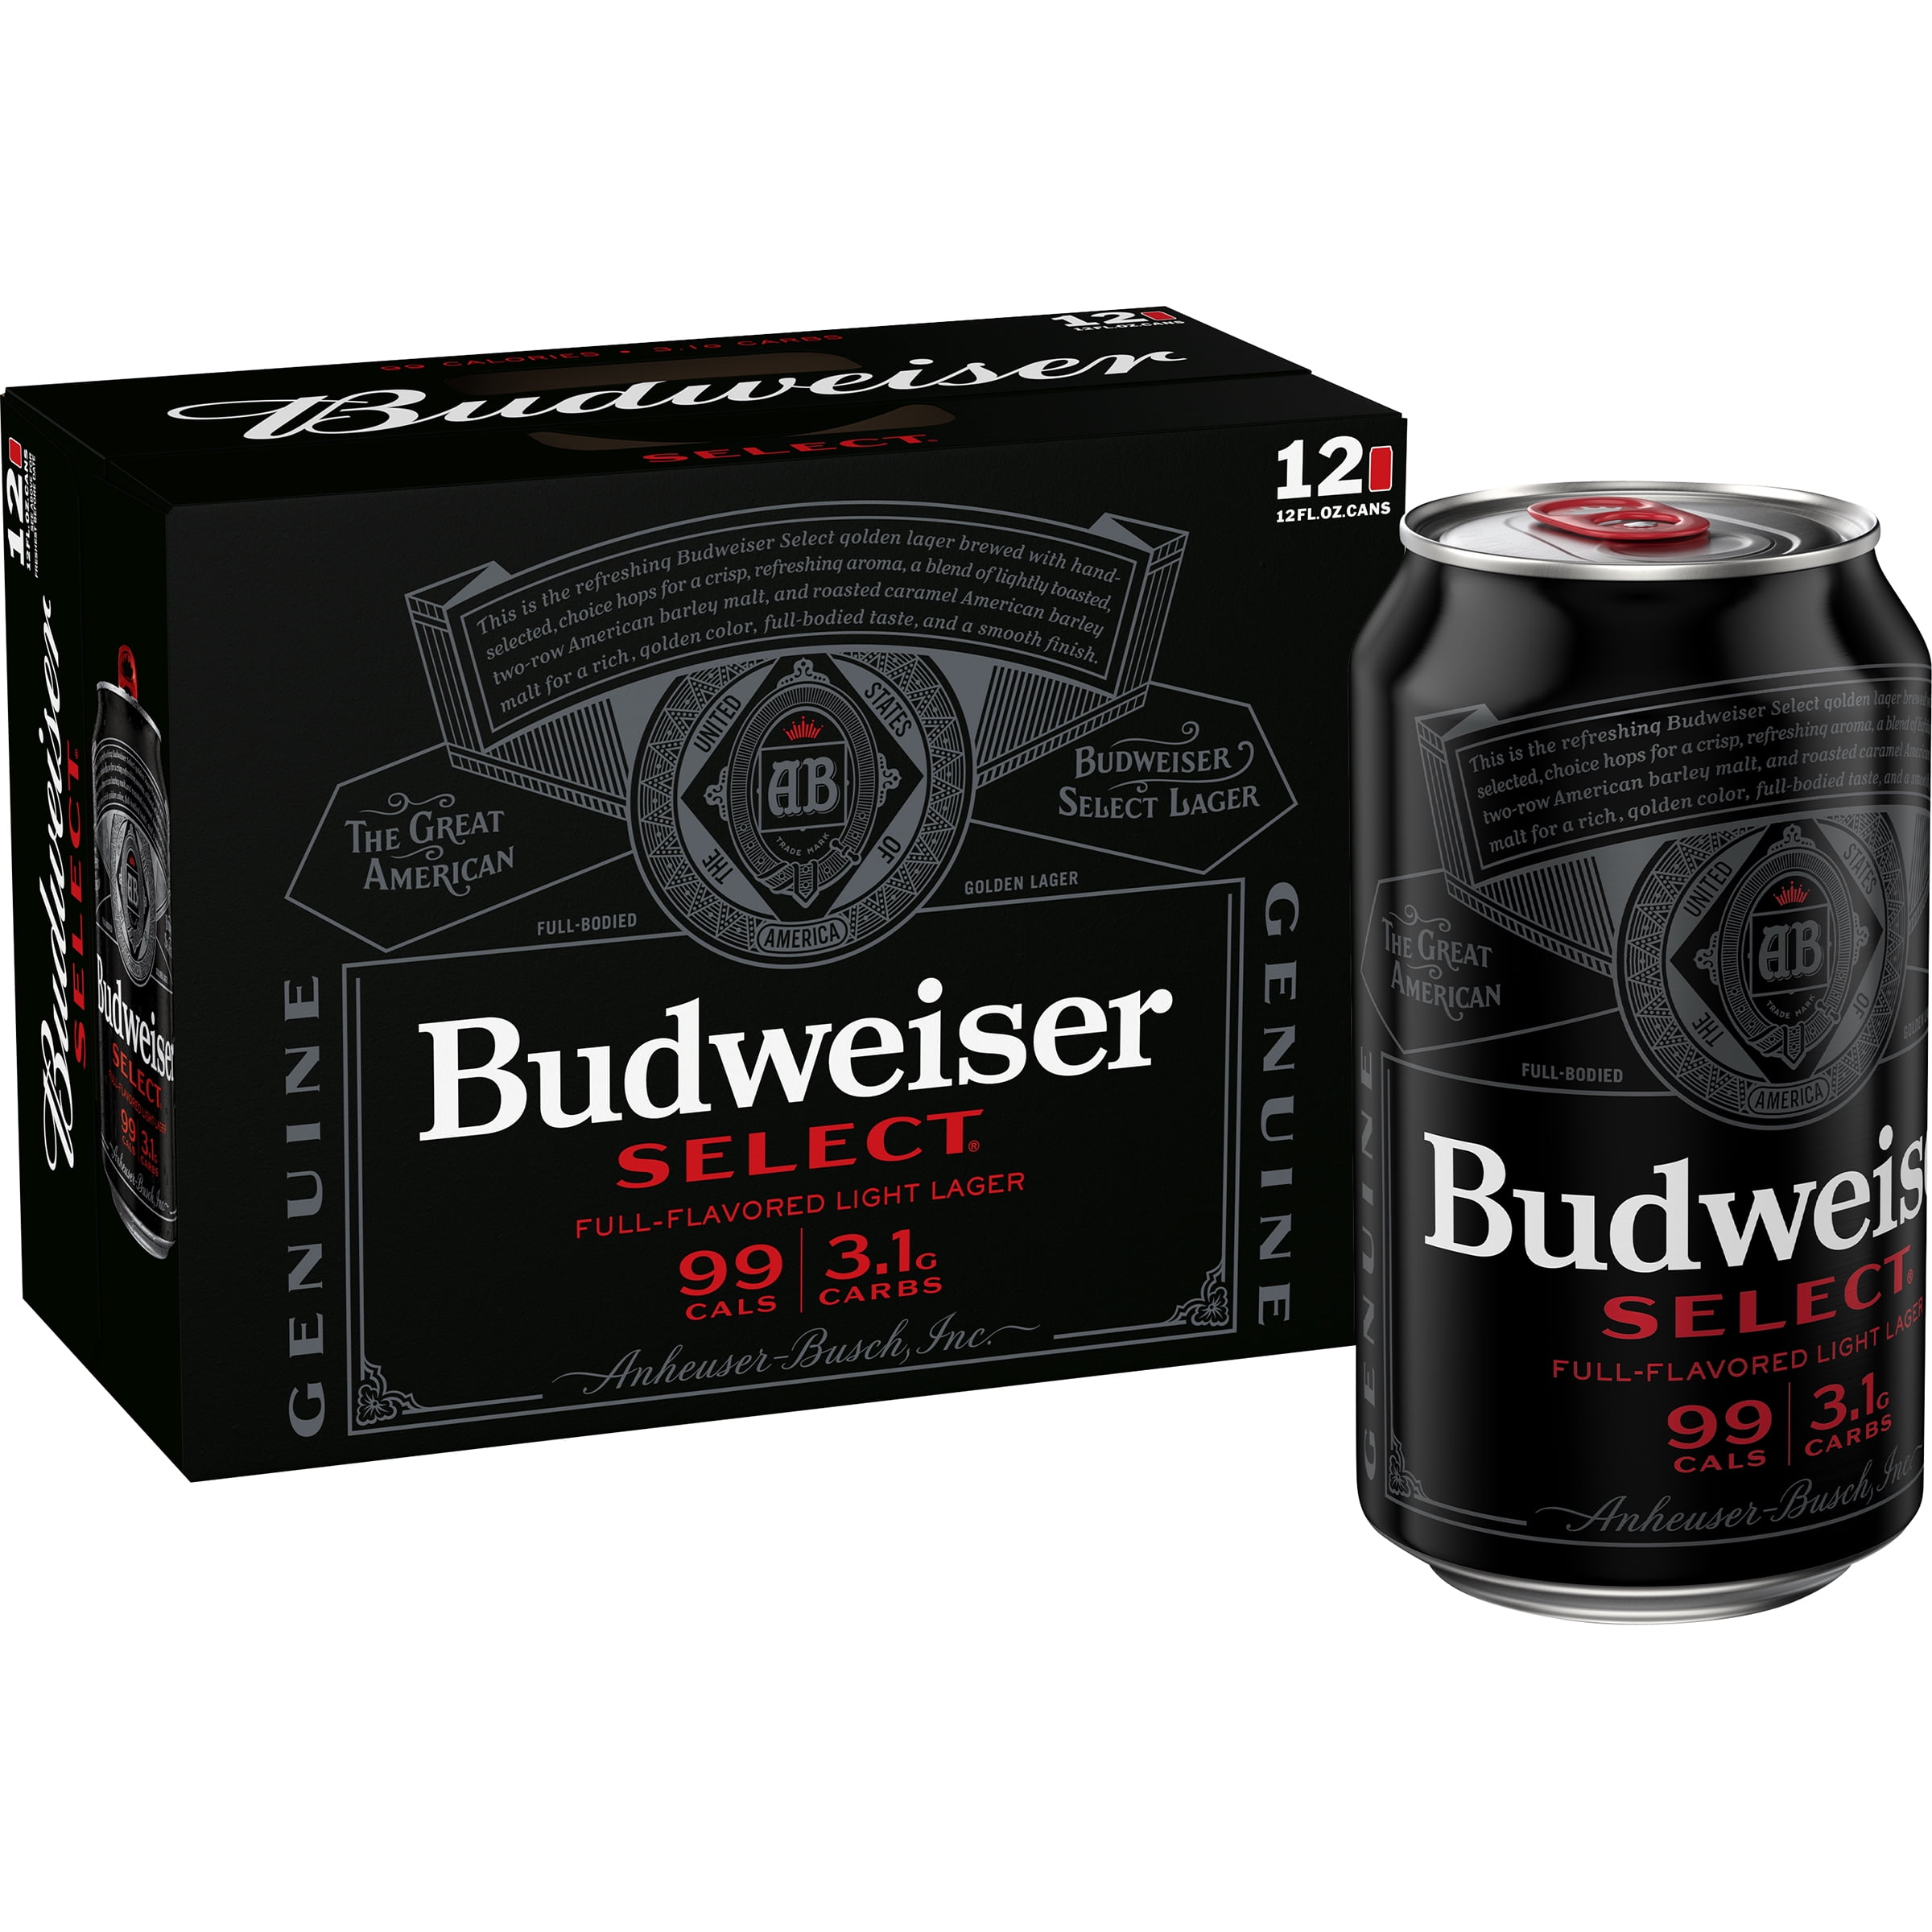 Selected full. Будвайзер Селект. Budweiser select пиво. Красный лагер Американ Лайт Budweiser. Bud select 55.